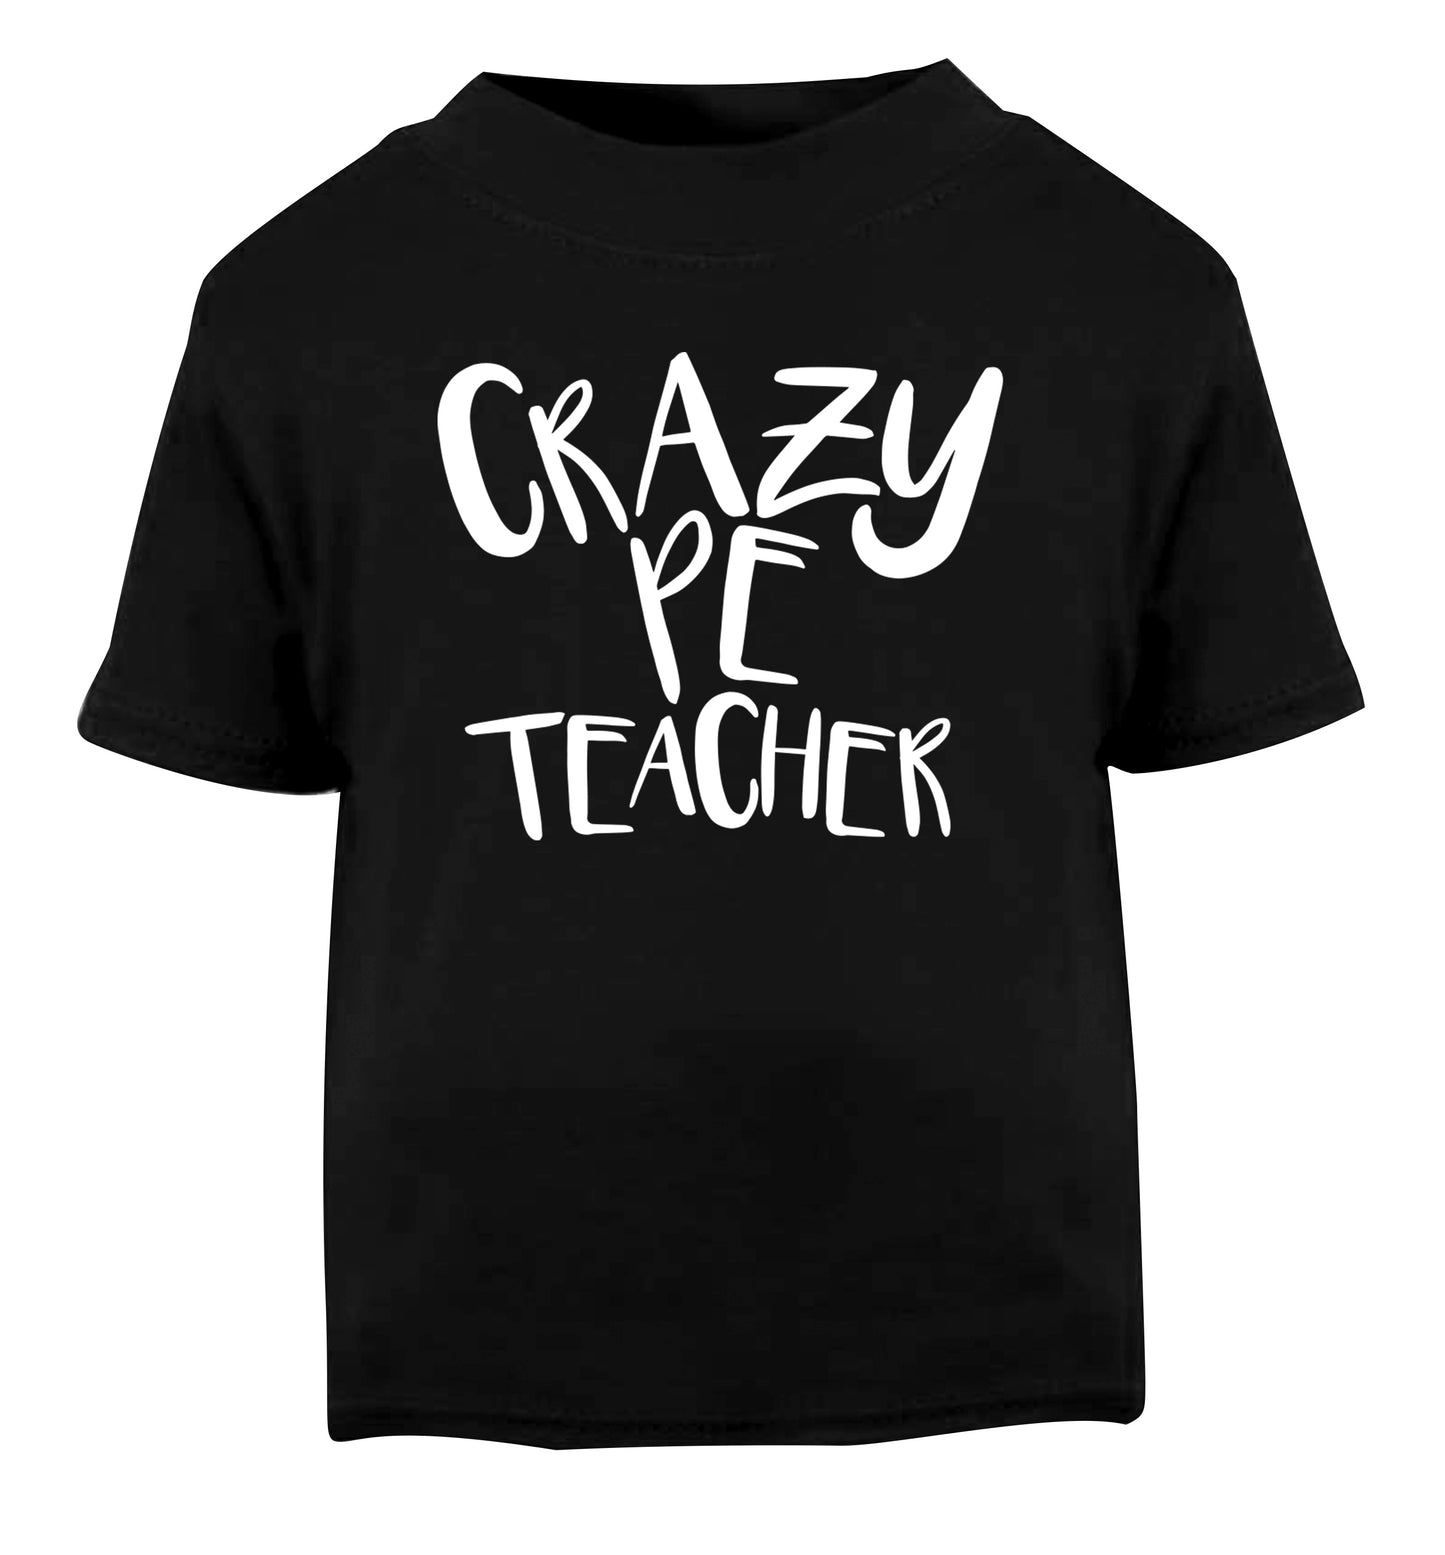 Crazy PE teacher Black Baby Toddler Tshirt 2 years